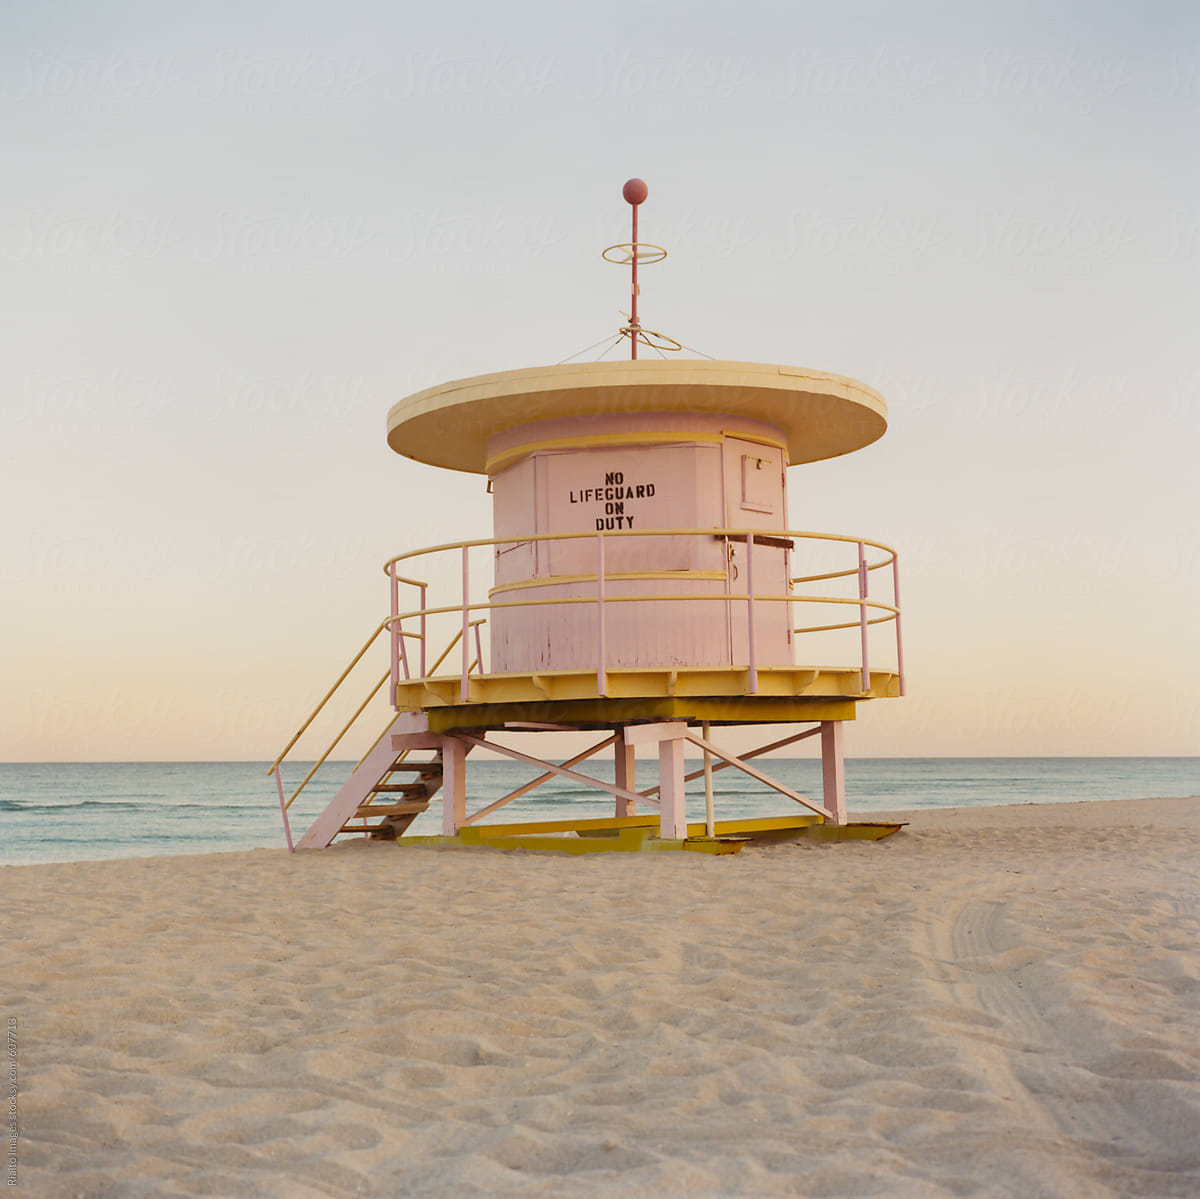 Art deco lifeguard station on beach at dusk, Miami, Florida